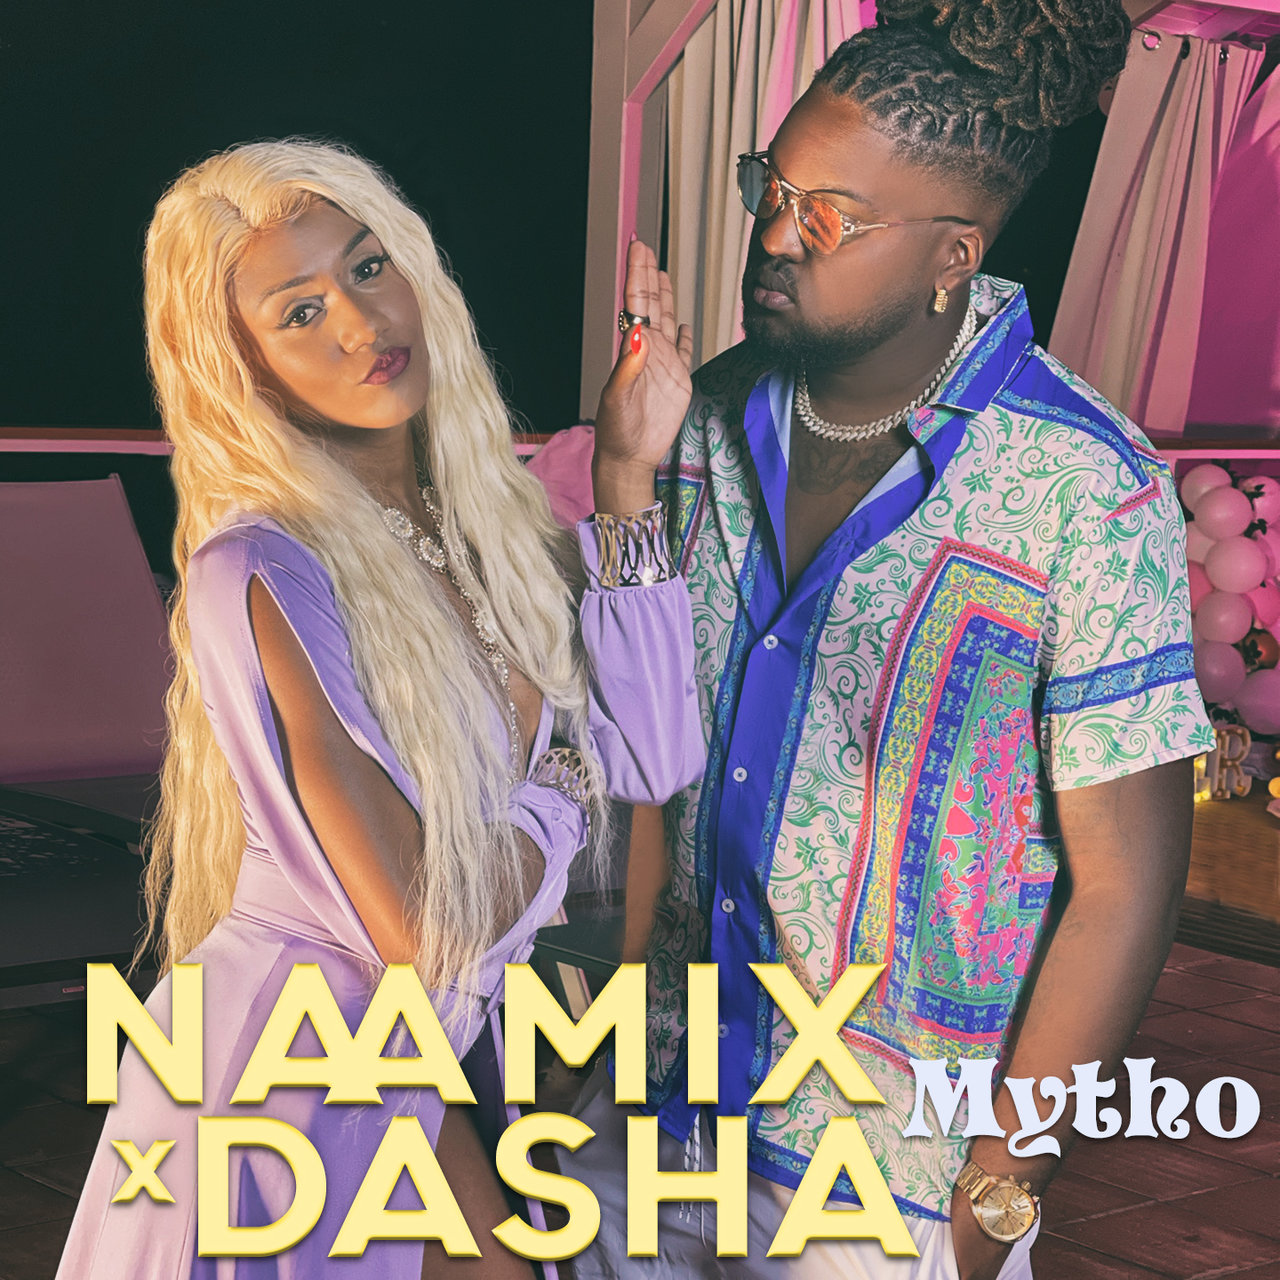 Naamix - Mytho (ft. Dasha) (Cover)